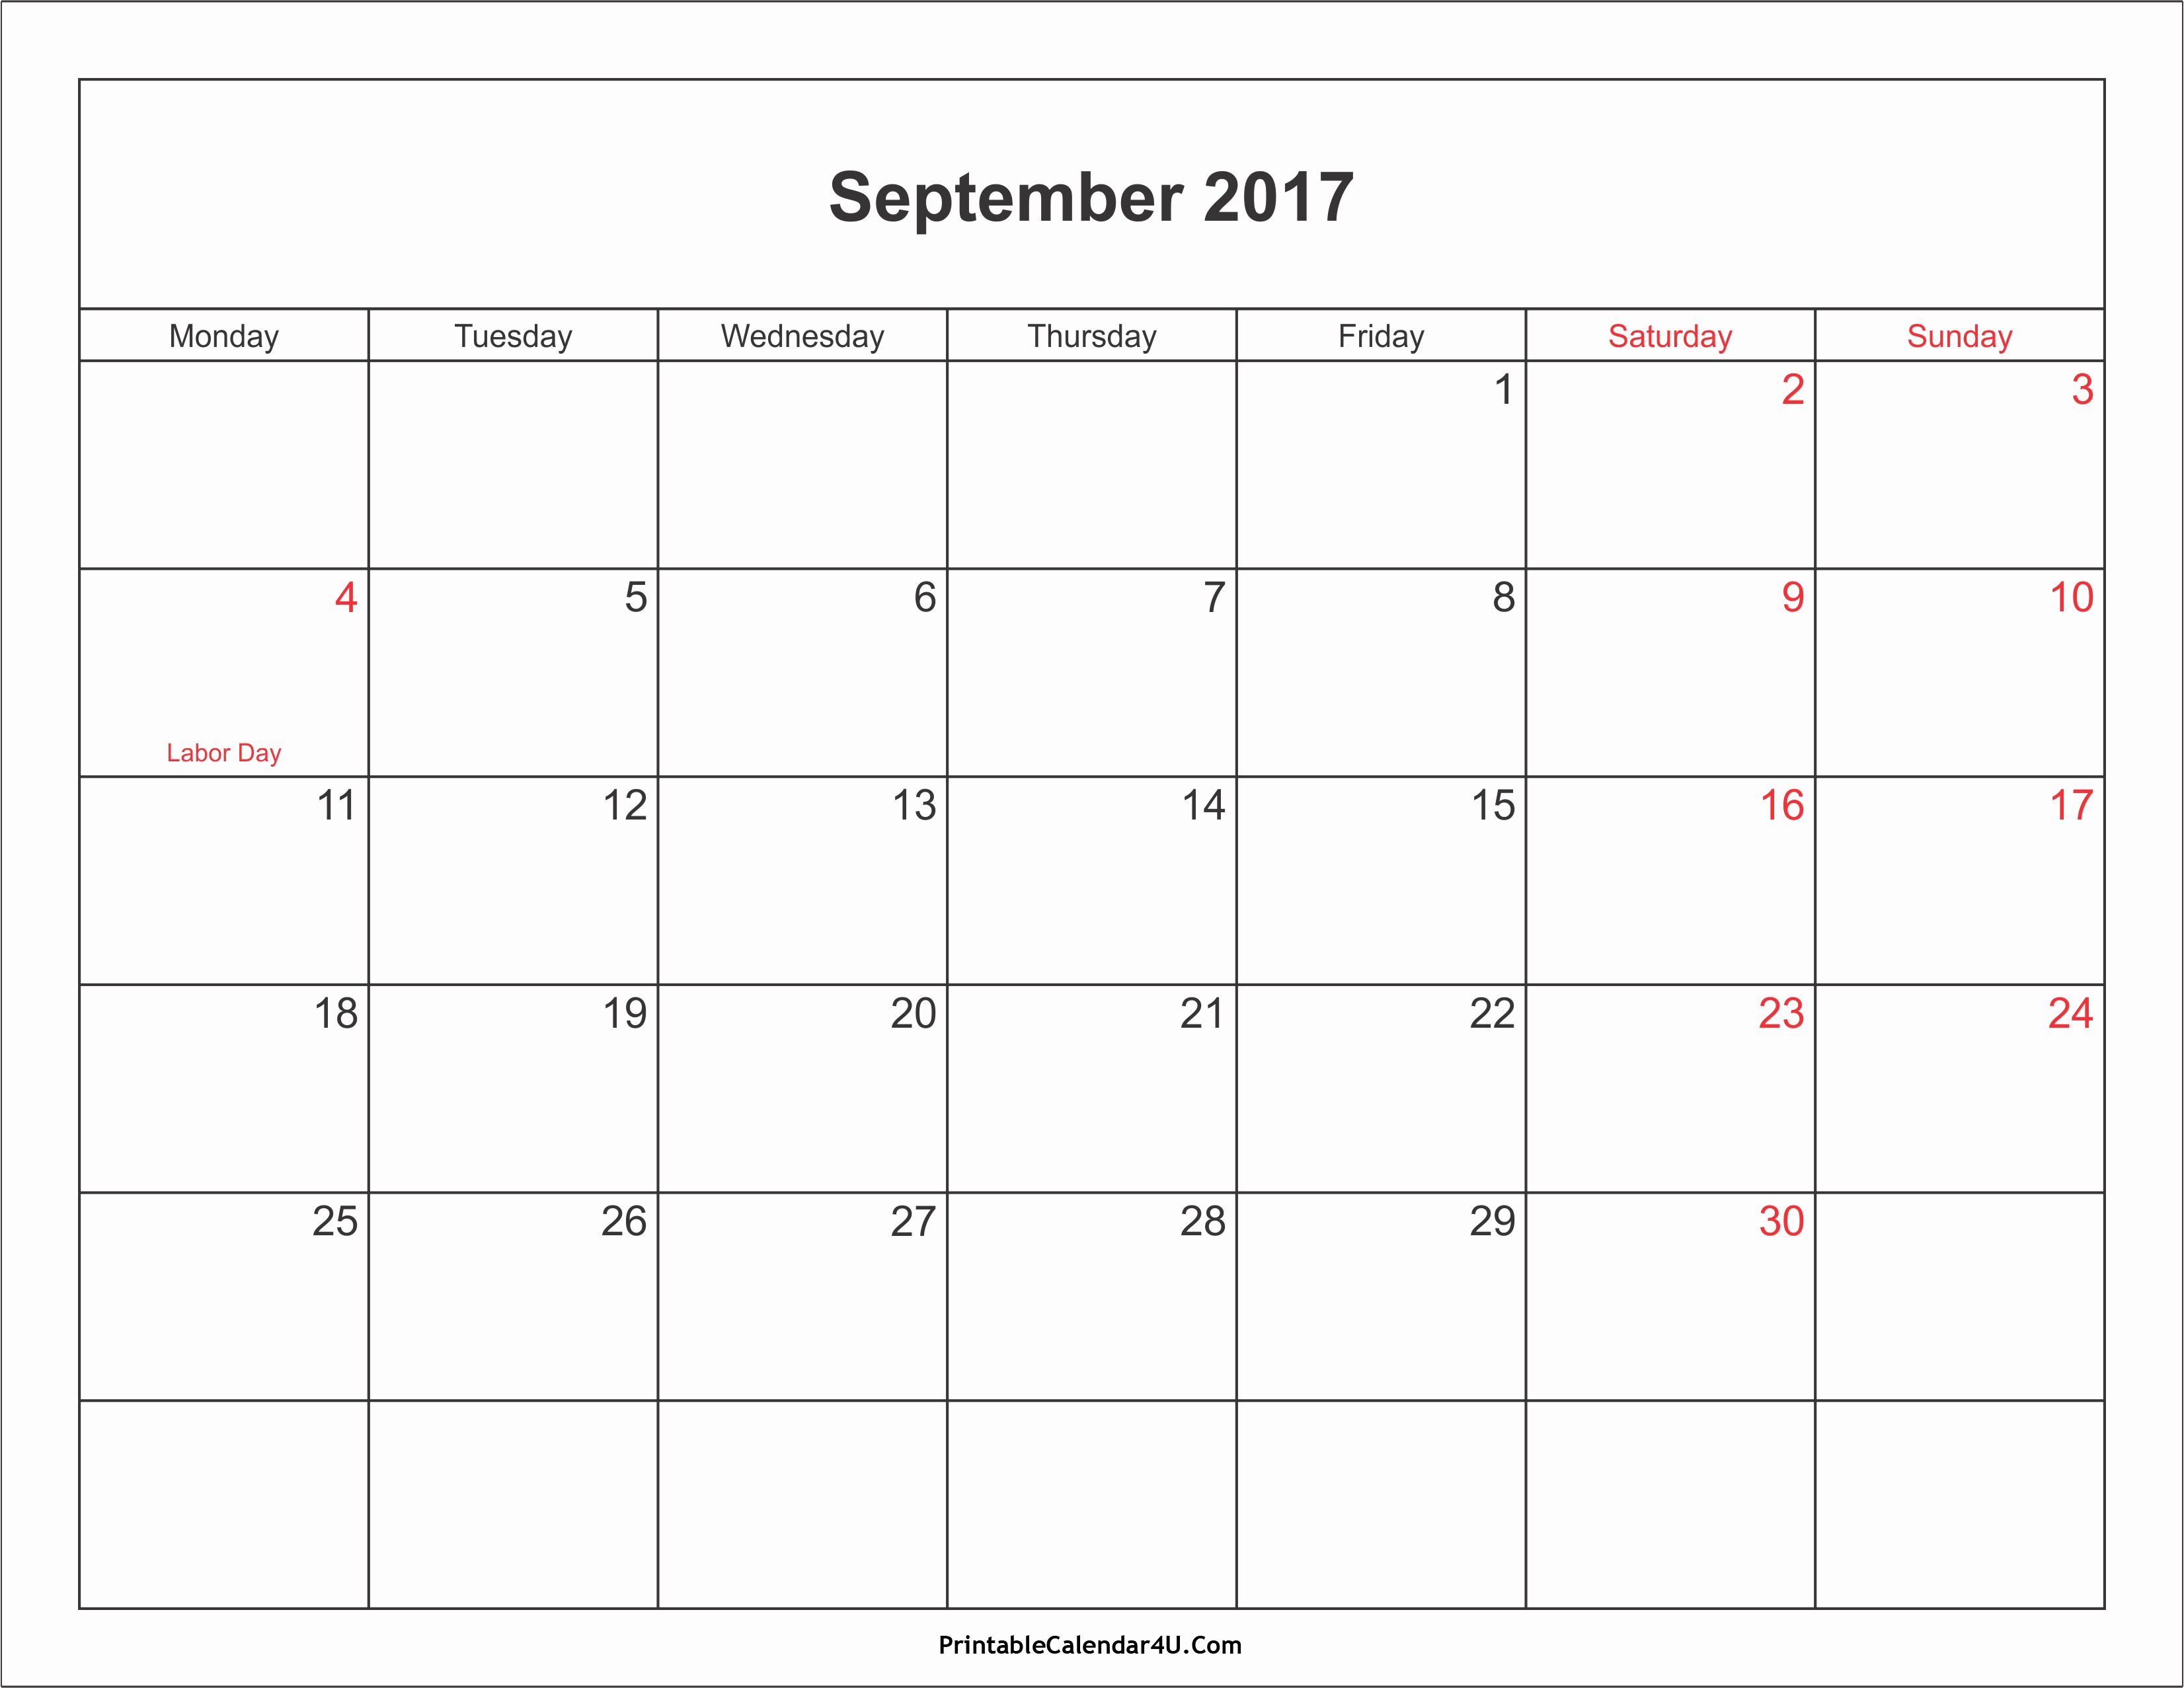 September 2017 Printable Calendar Word New September 2017 Calendar Pdf